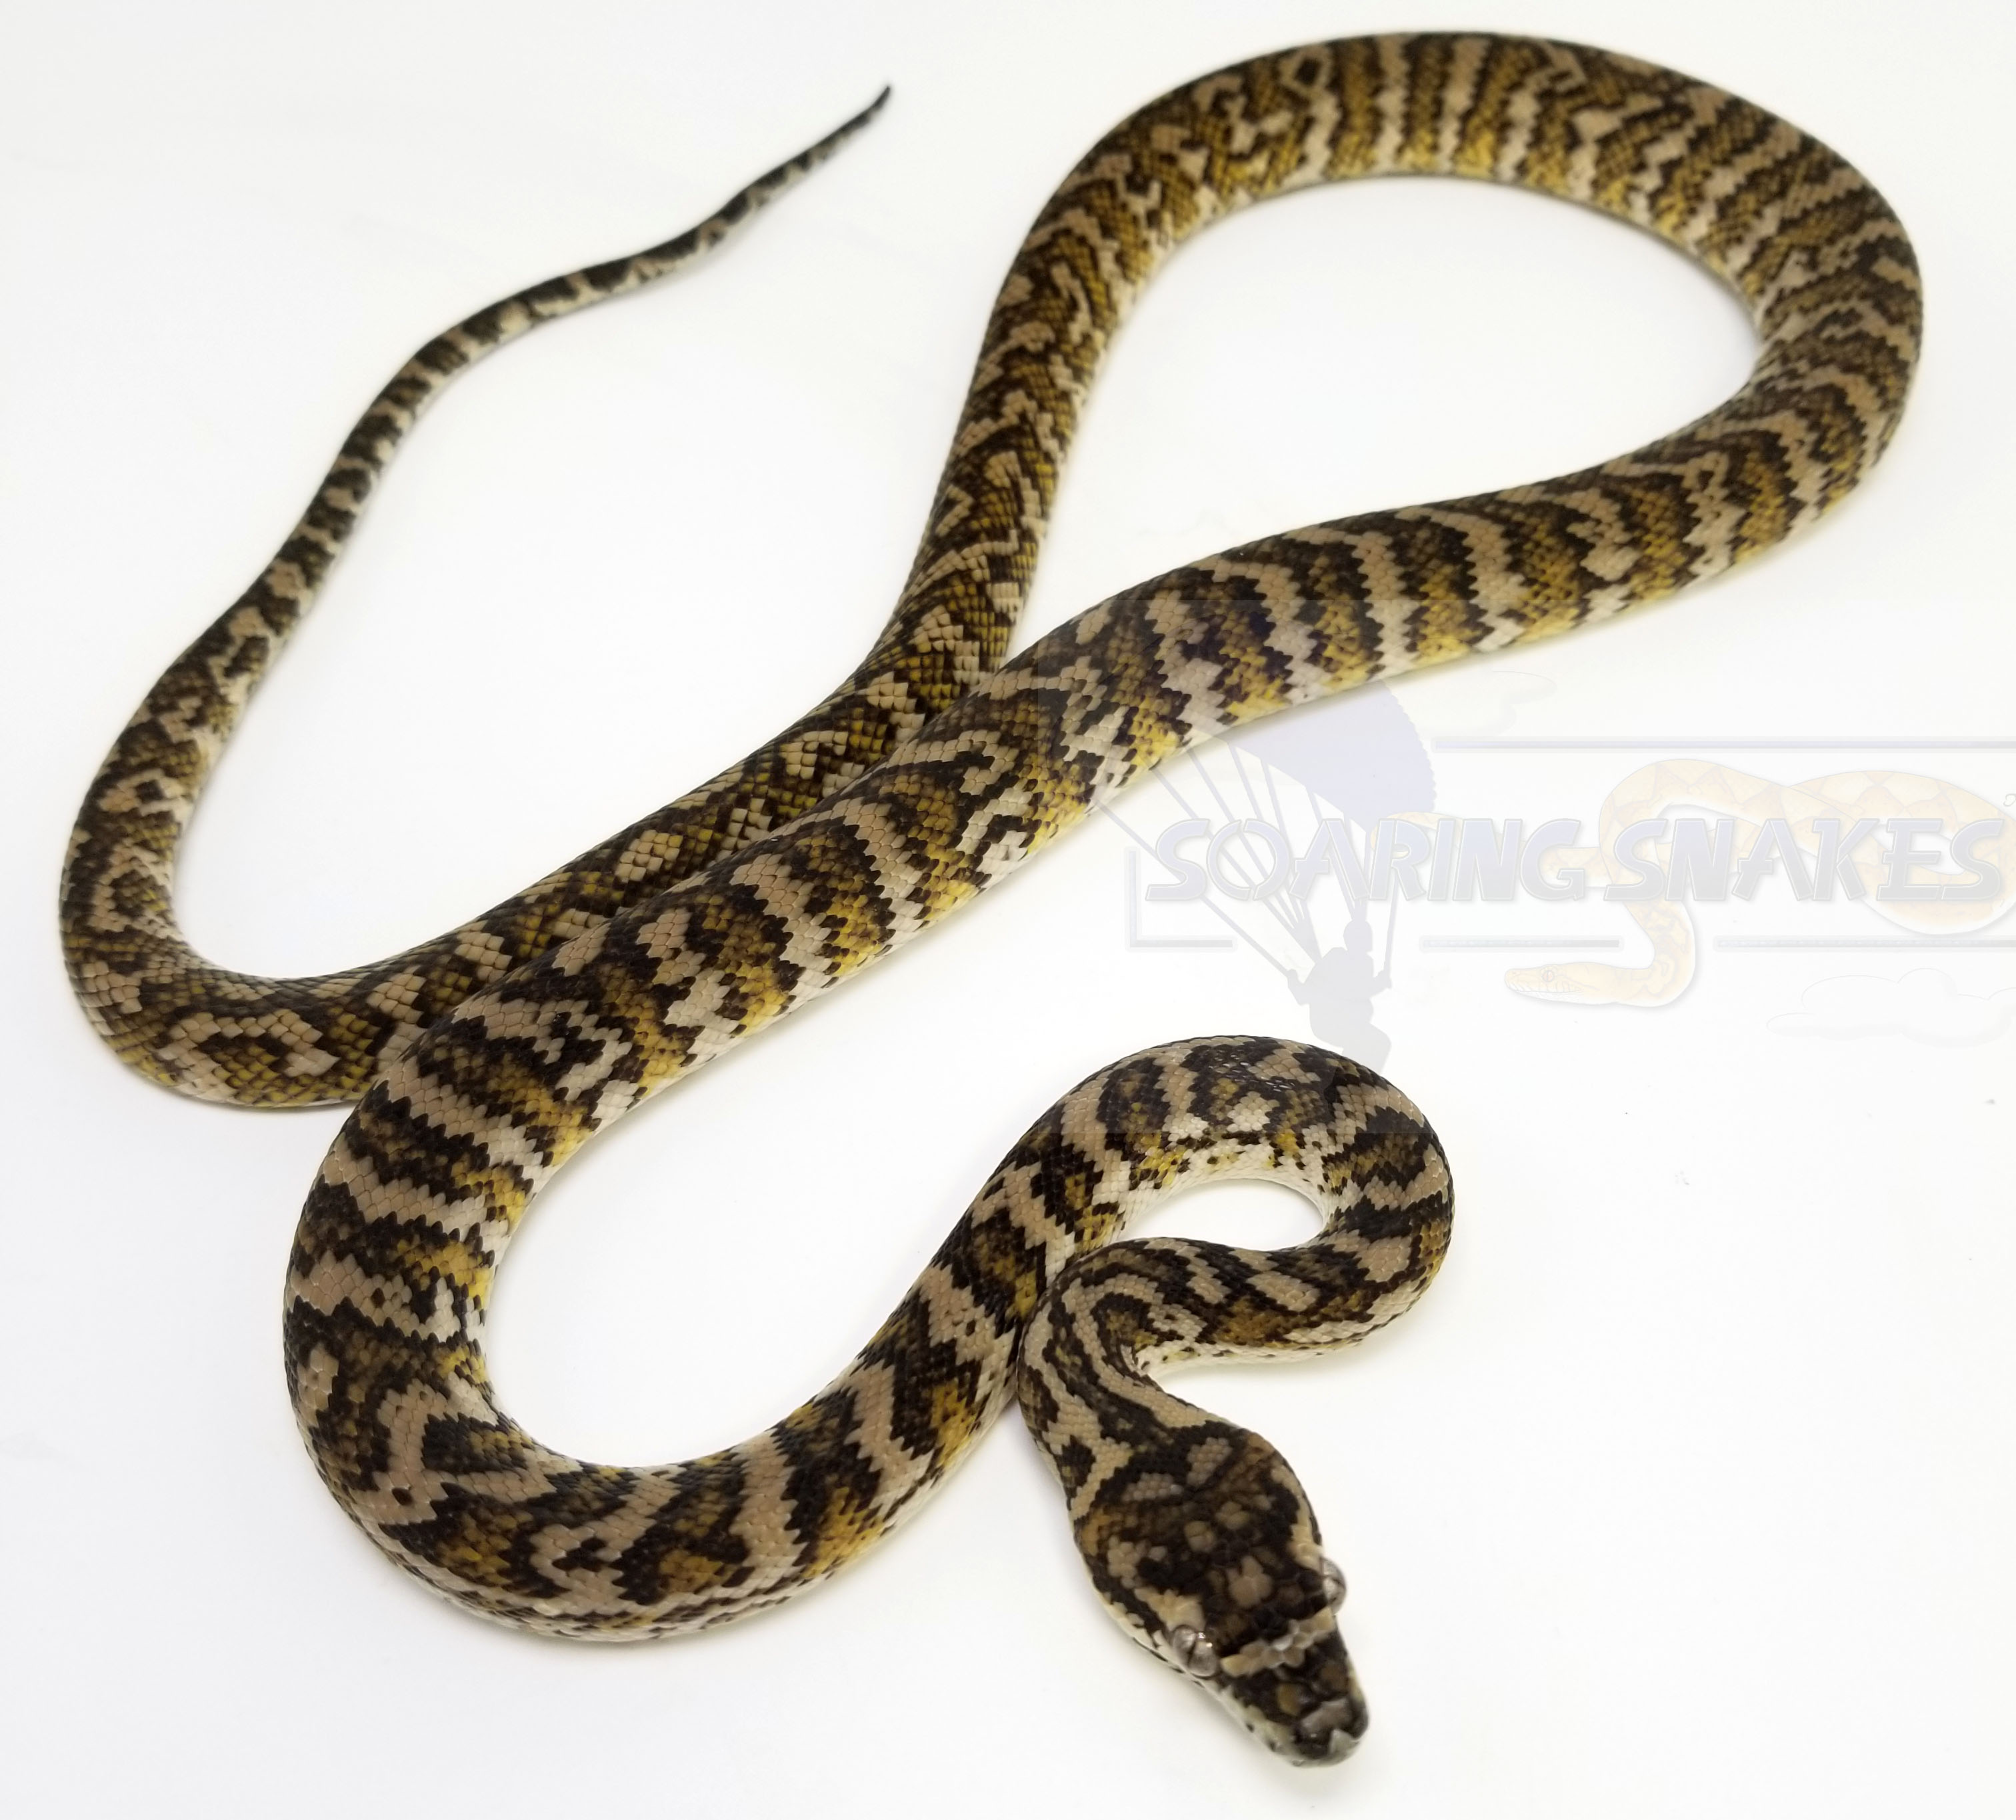 Caramel Coastal Carpet Python by Soaring Snakes